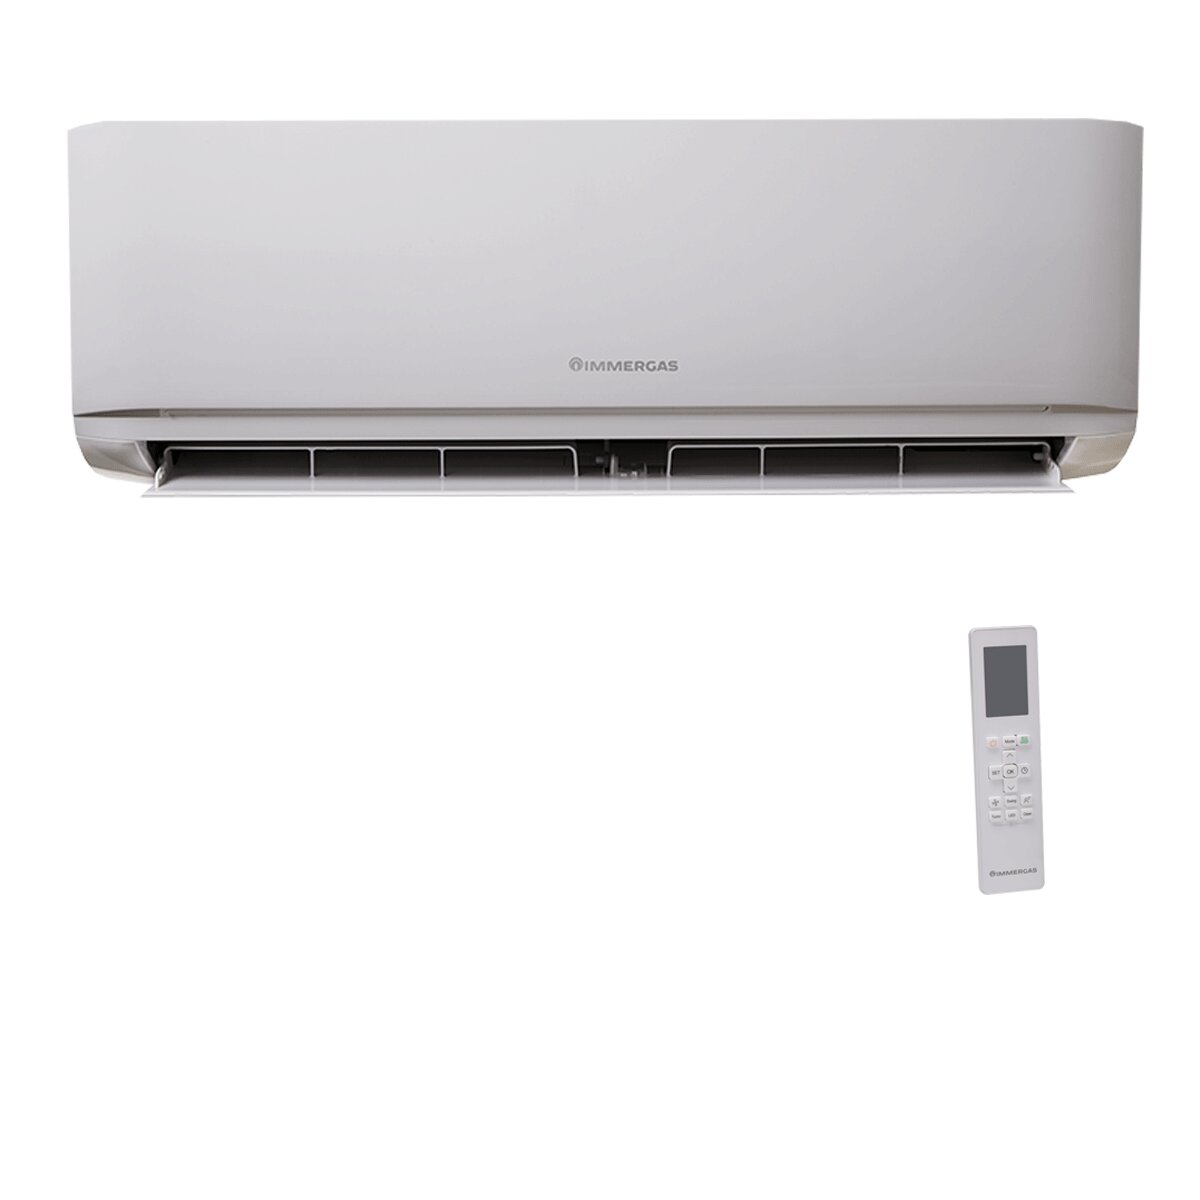 Immergas THOR 12000 BTU R32 Inverter Air Conditioner A++/A+